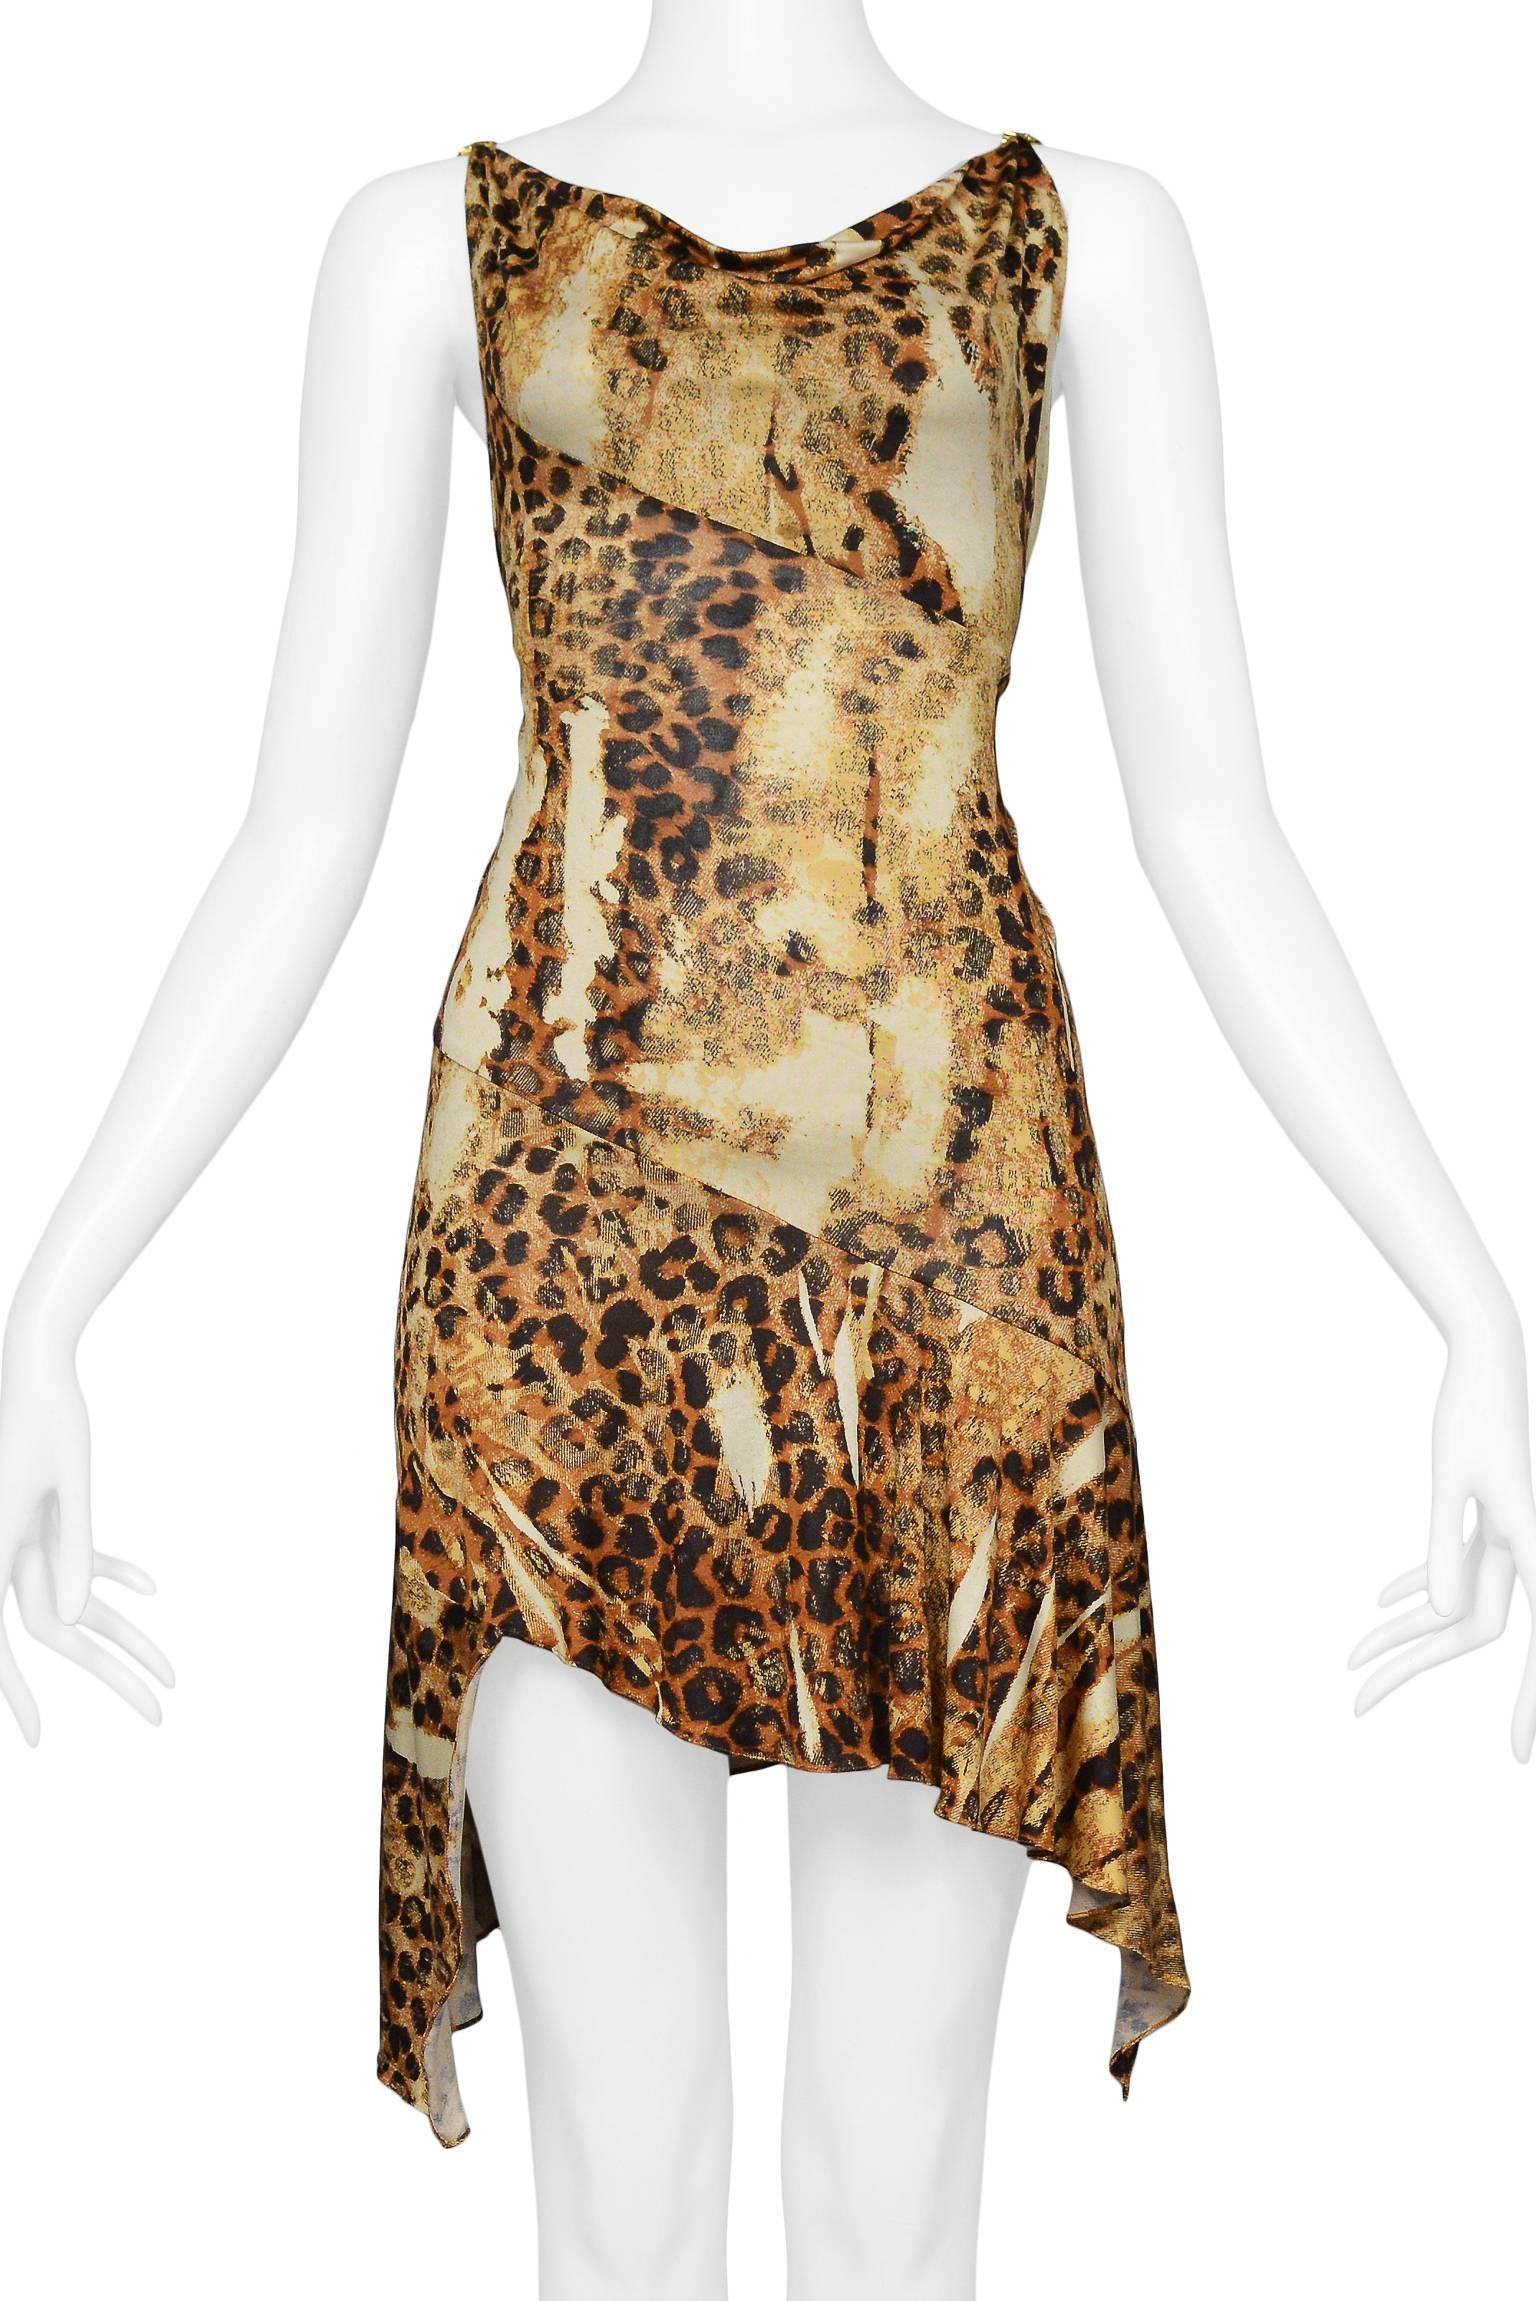 christian dior leopard dress